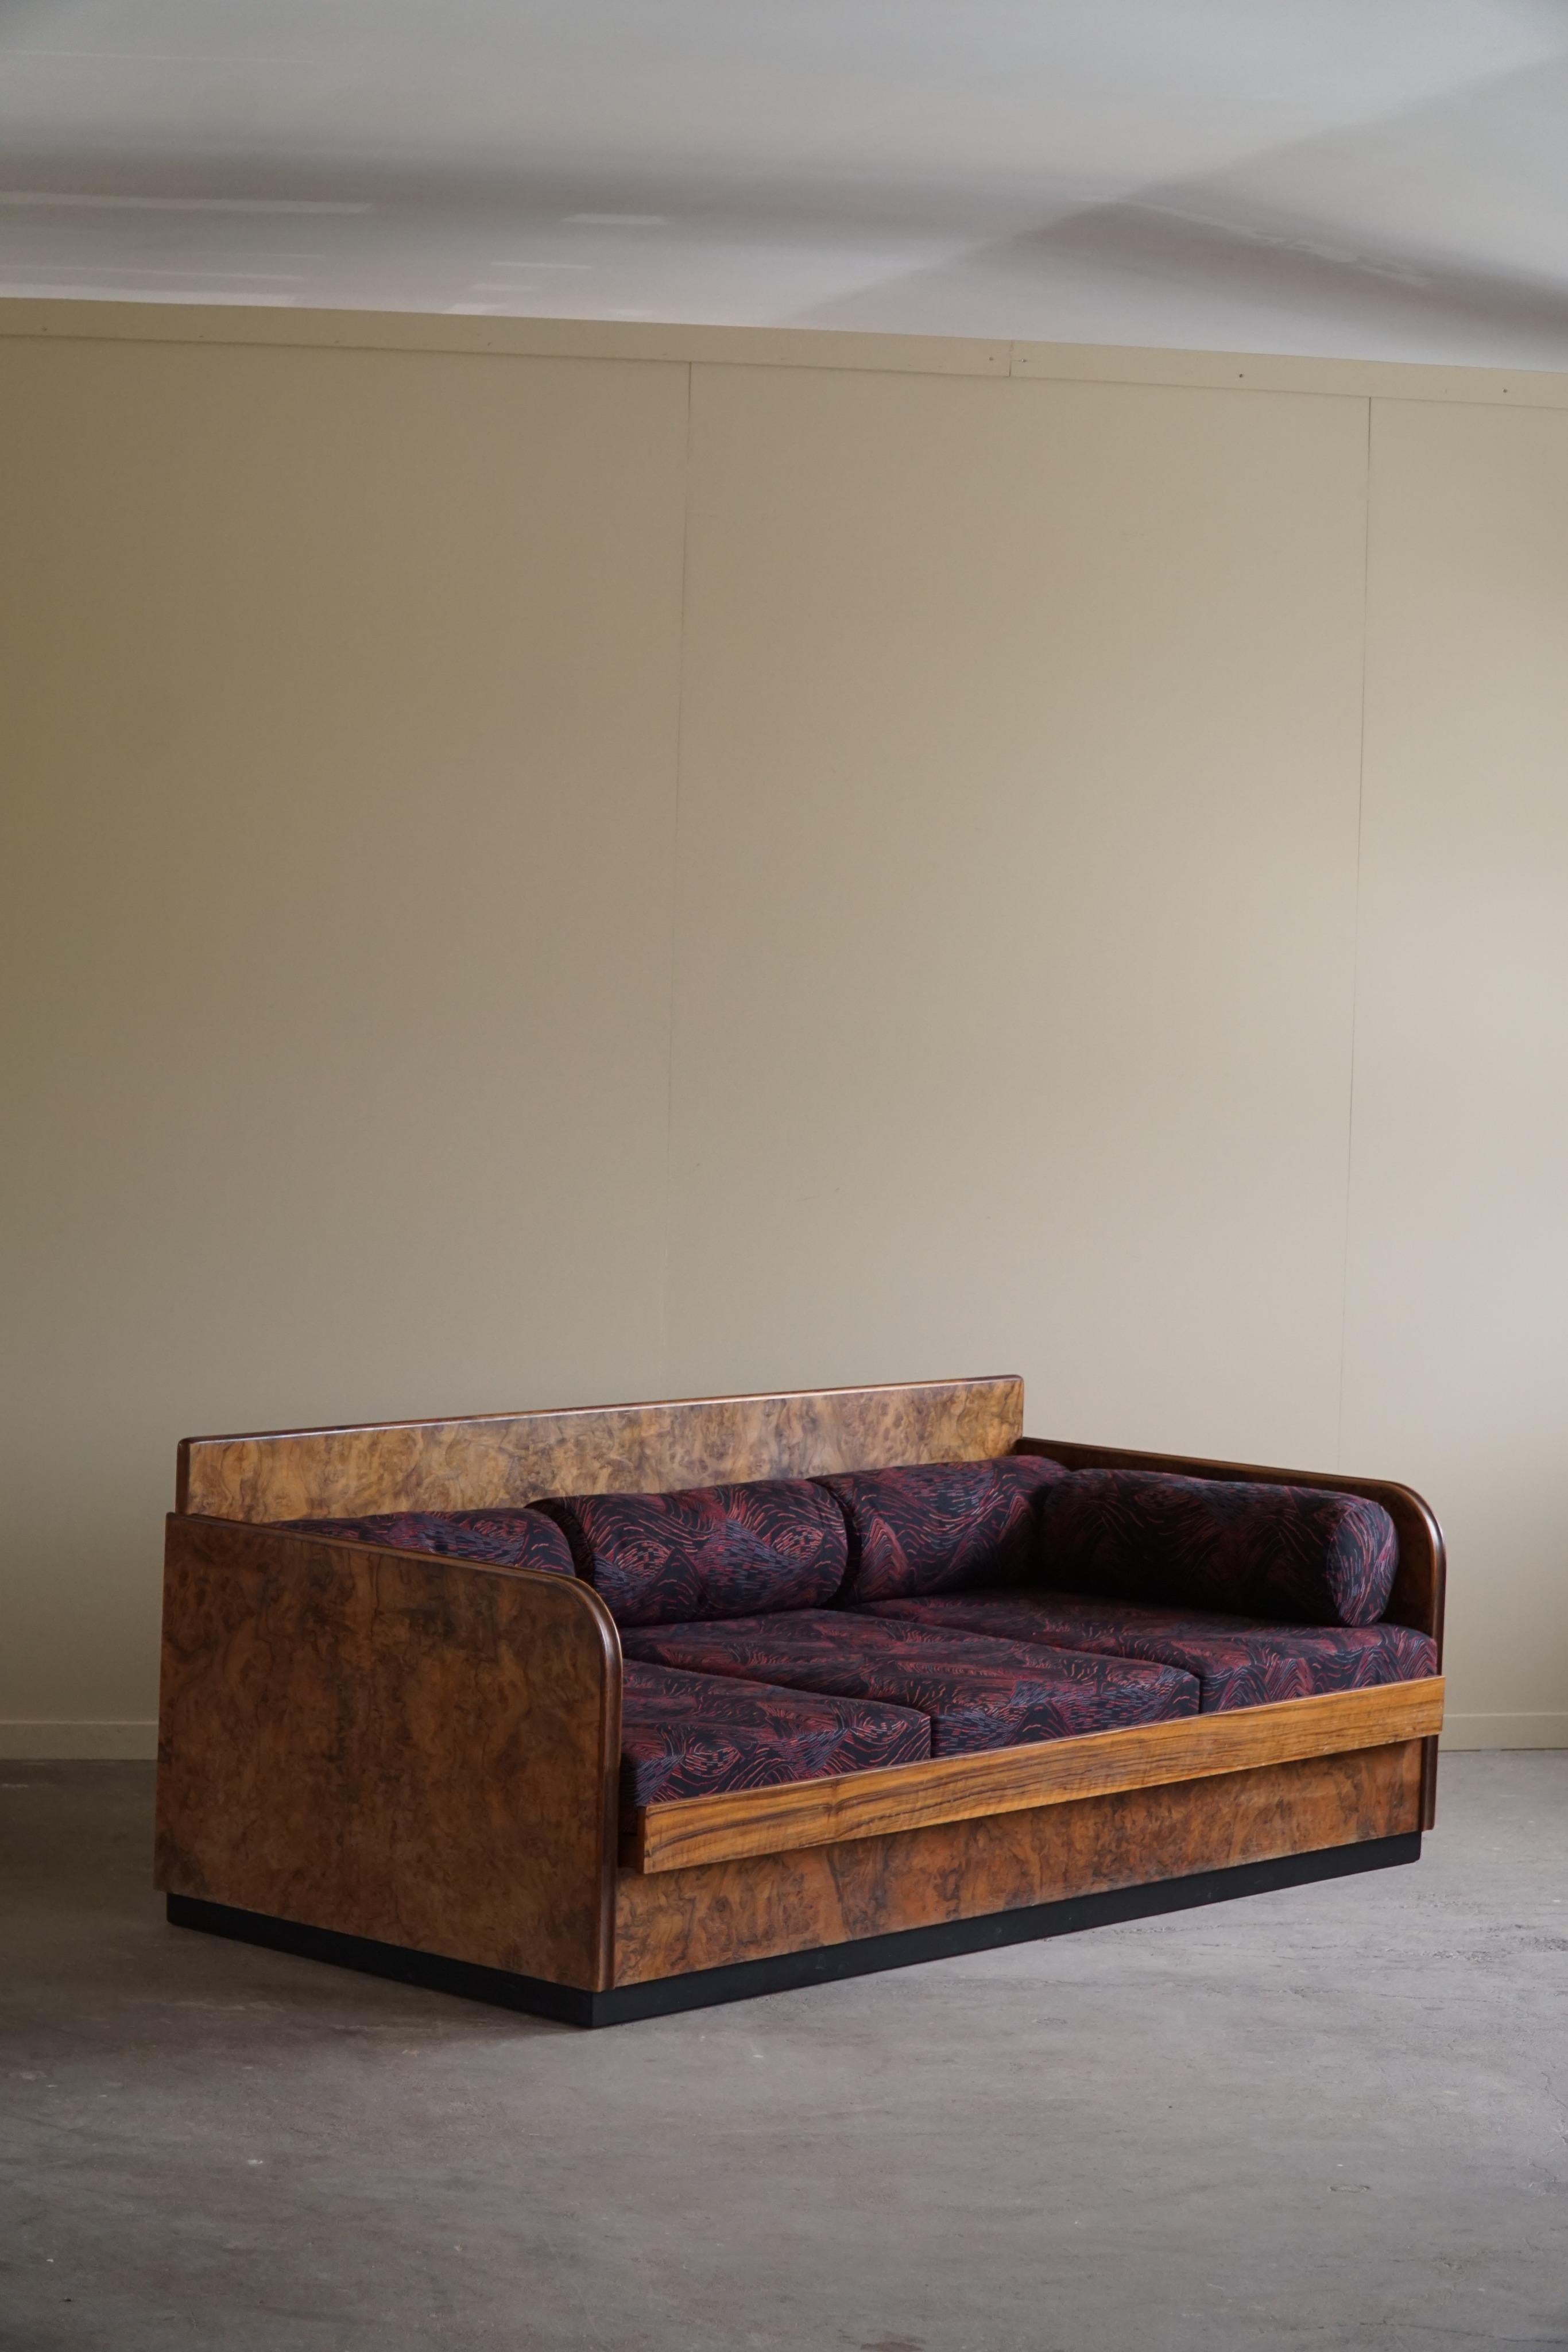 Danish Sculptural Sofa in Nutwood & Burl, Art Deco, Swedish Cabinetmaker, 1940s For Sale